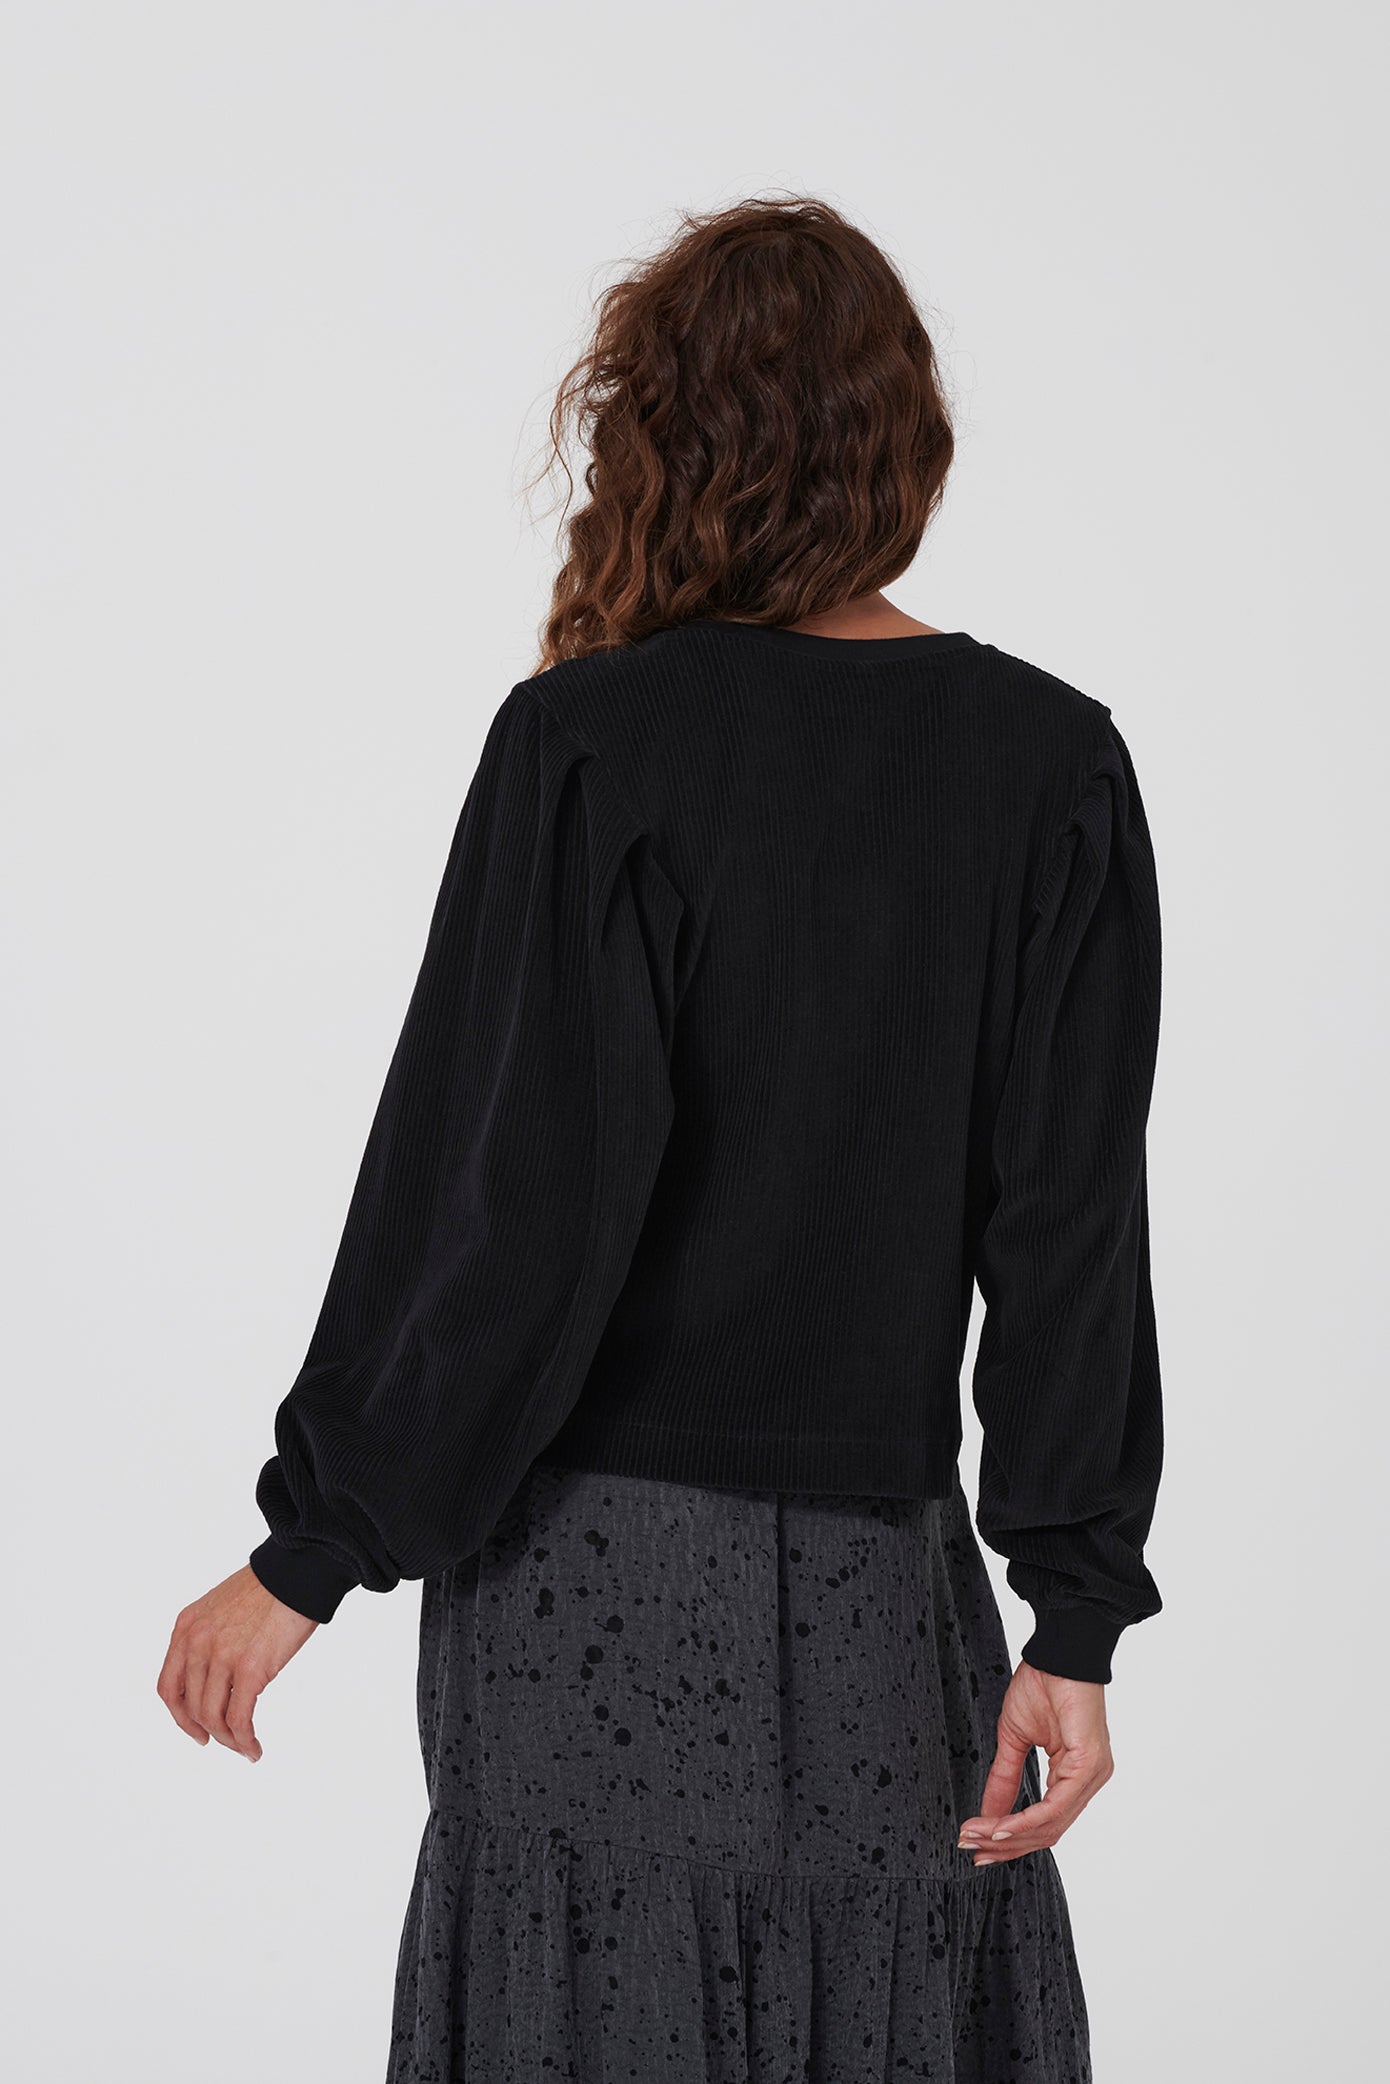 Sweatshirt MALVINE in black by LOVJOI made of organic cotton